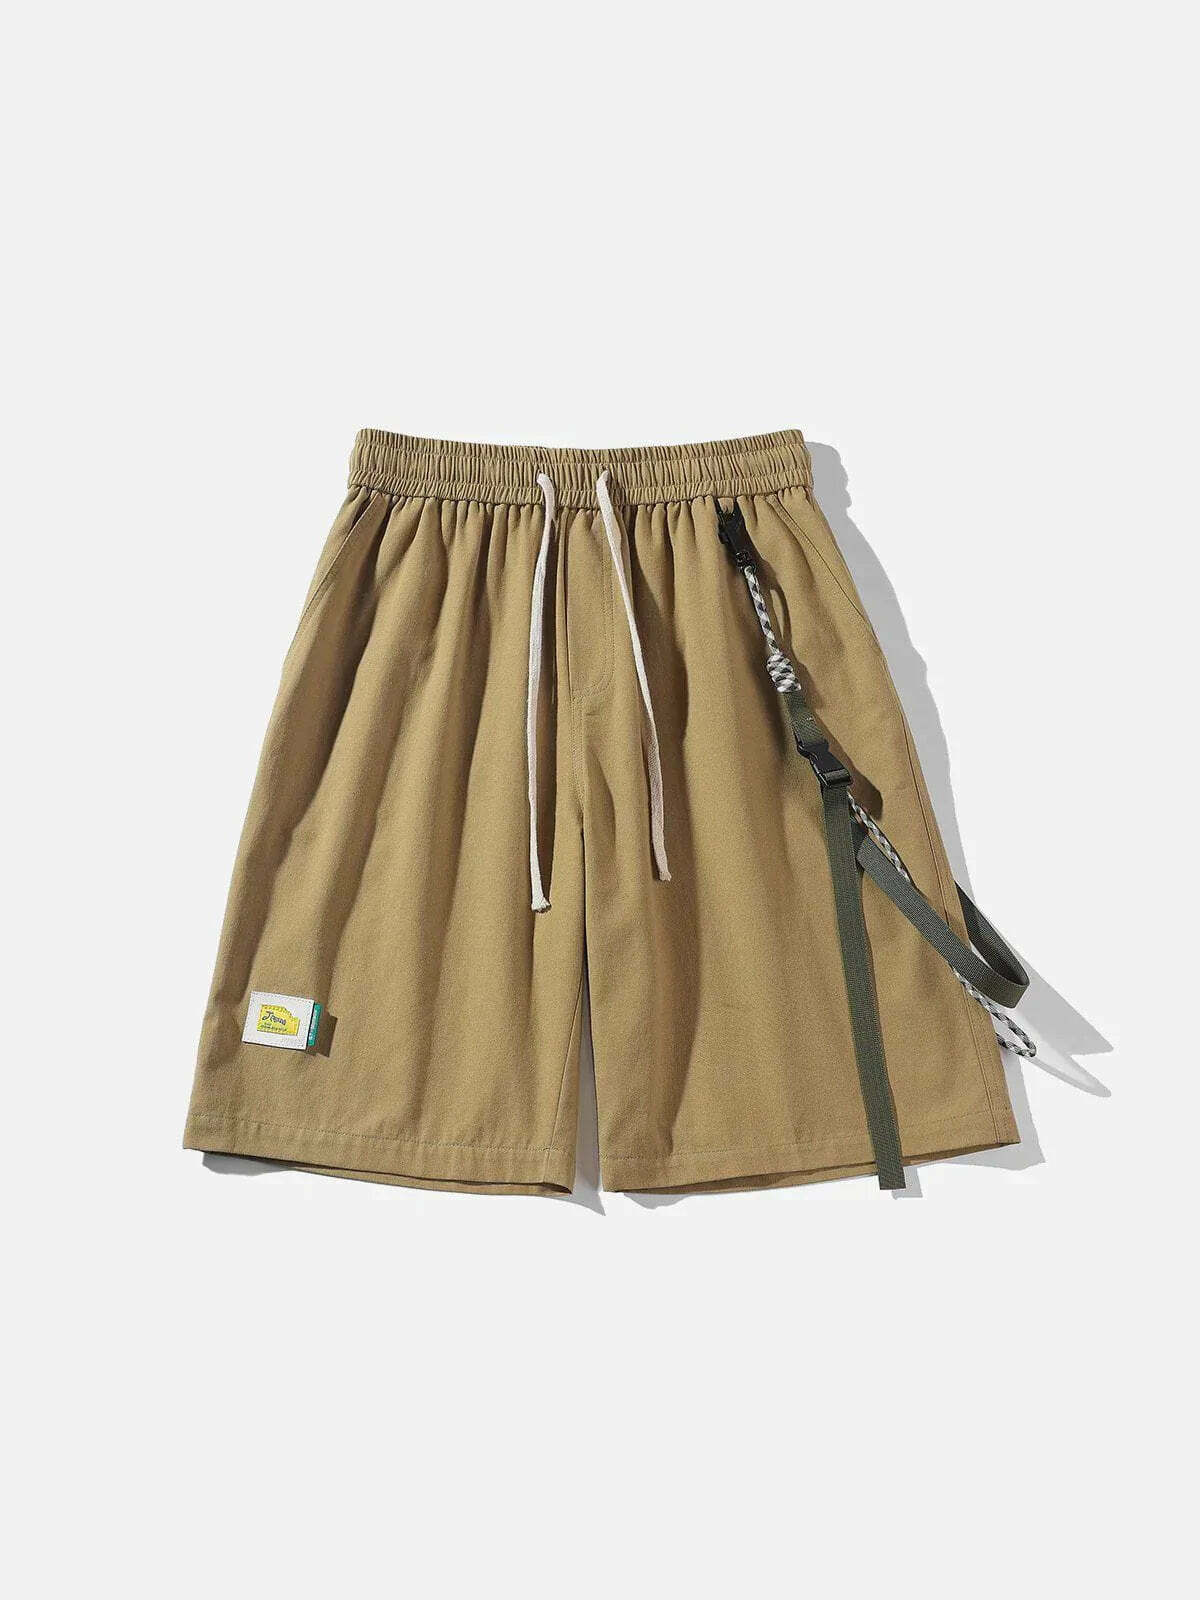 elastic waistband detachable strap shorts edgy cargo style 2548